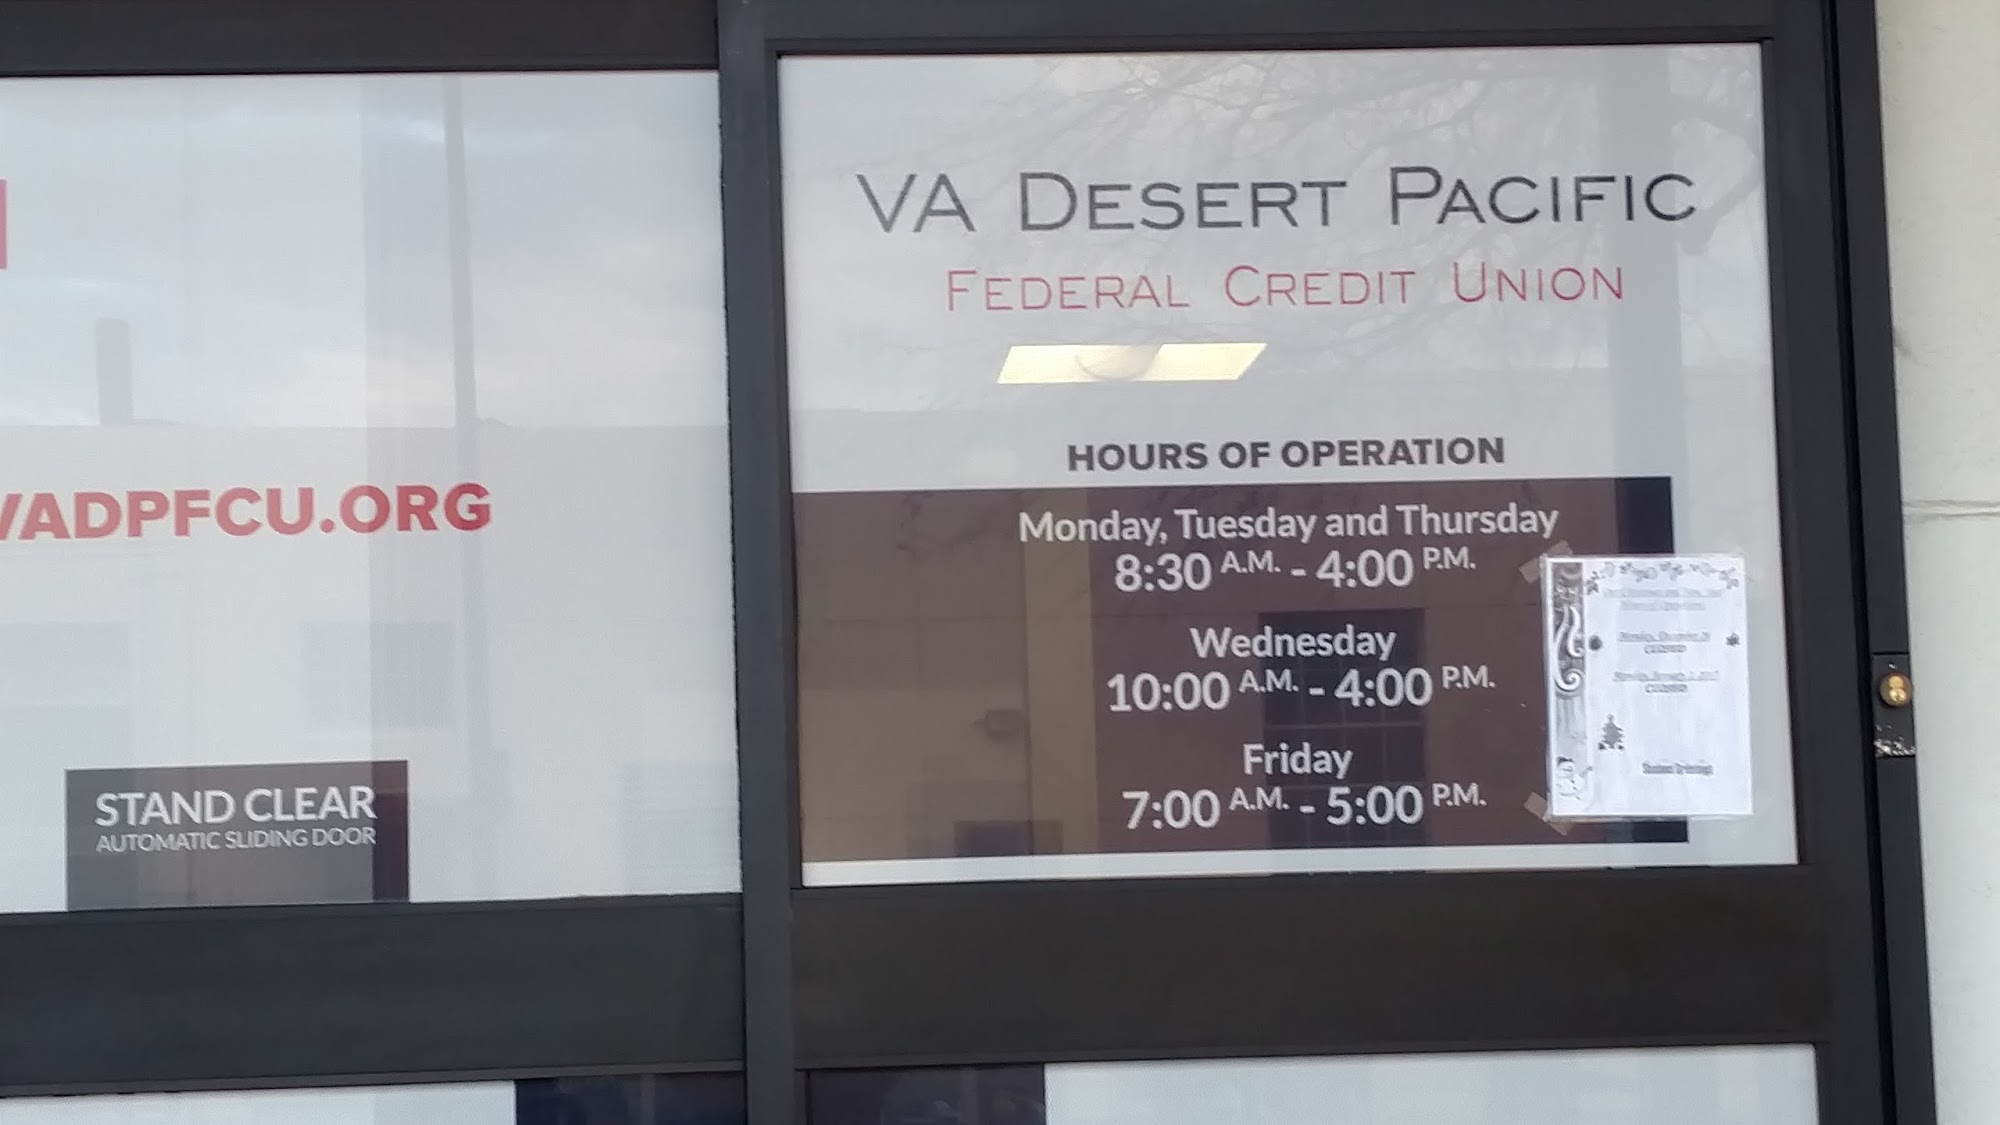 VA Desert Pacific Federal Credit Union